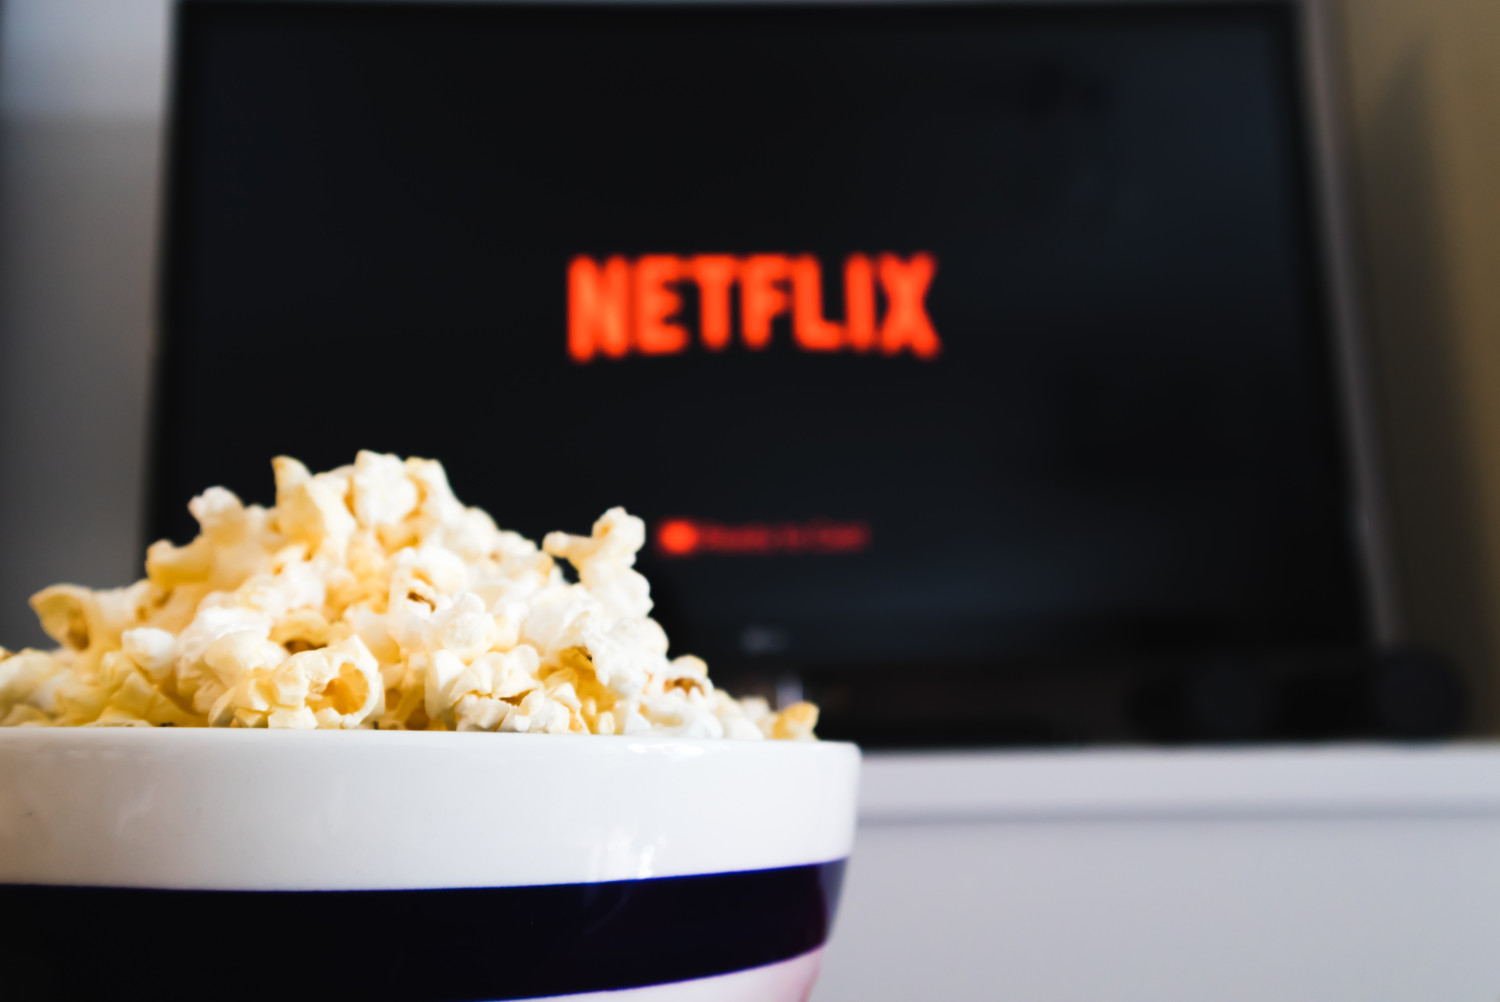 Netflix logo on Smart TV and Popcorn bowl